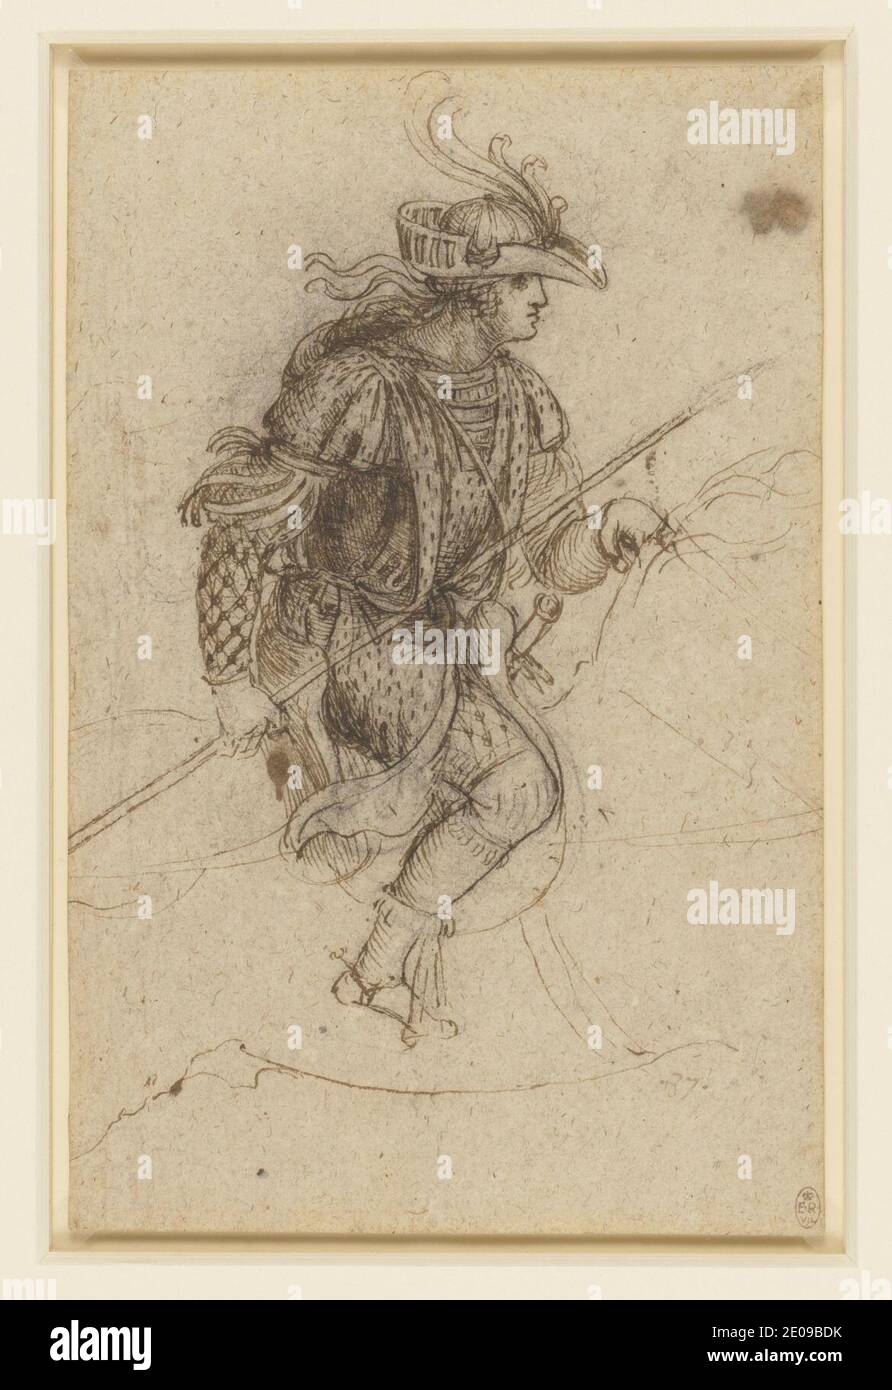 Leonardo da Vinci - A masquerader on horseback c.1517-18. Stock Photo